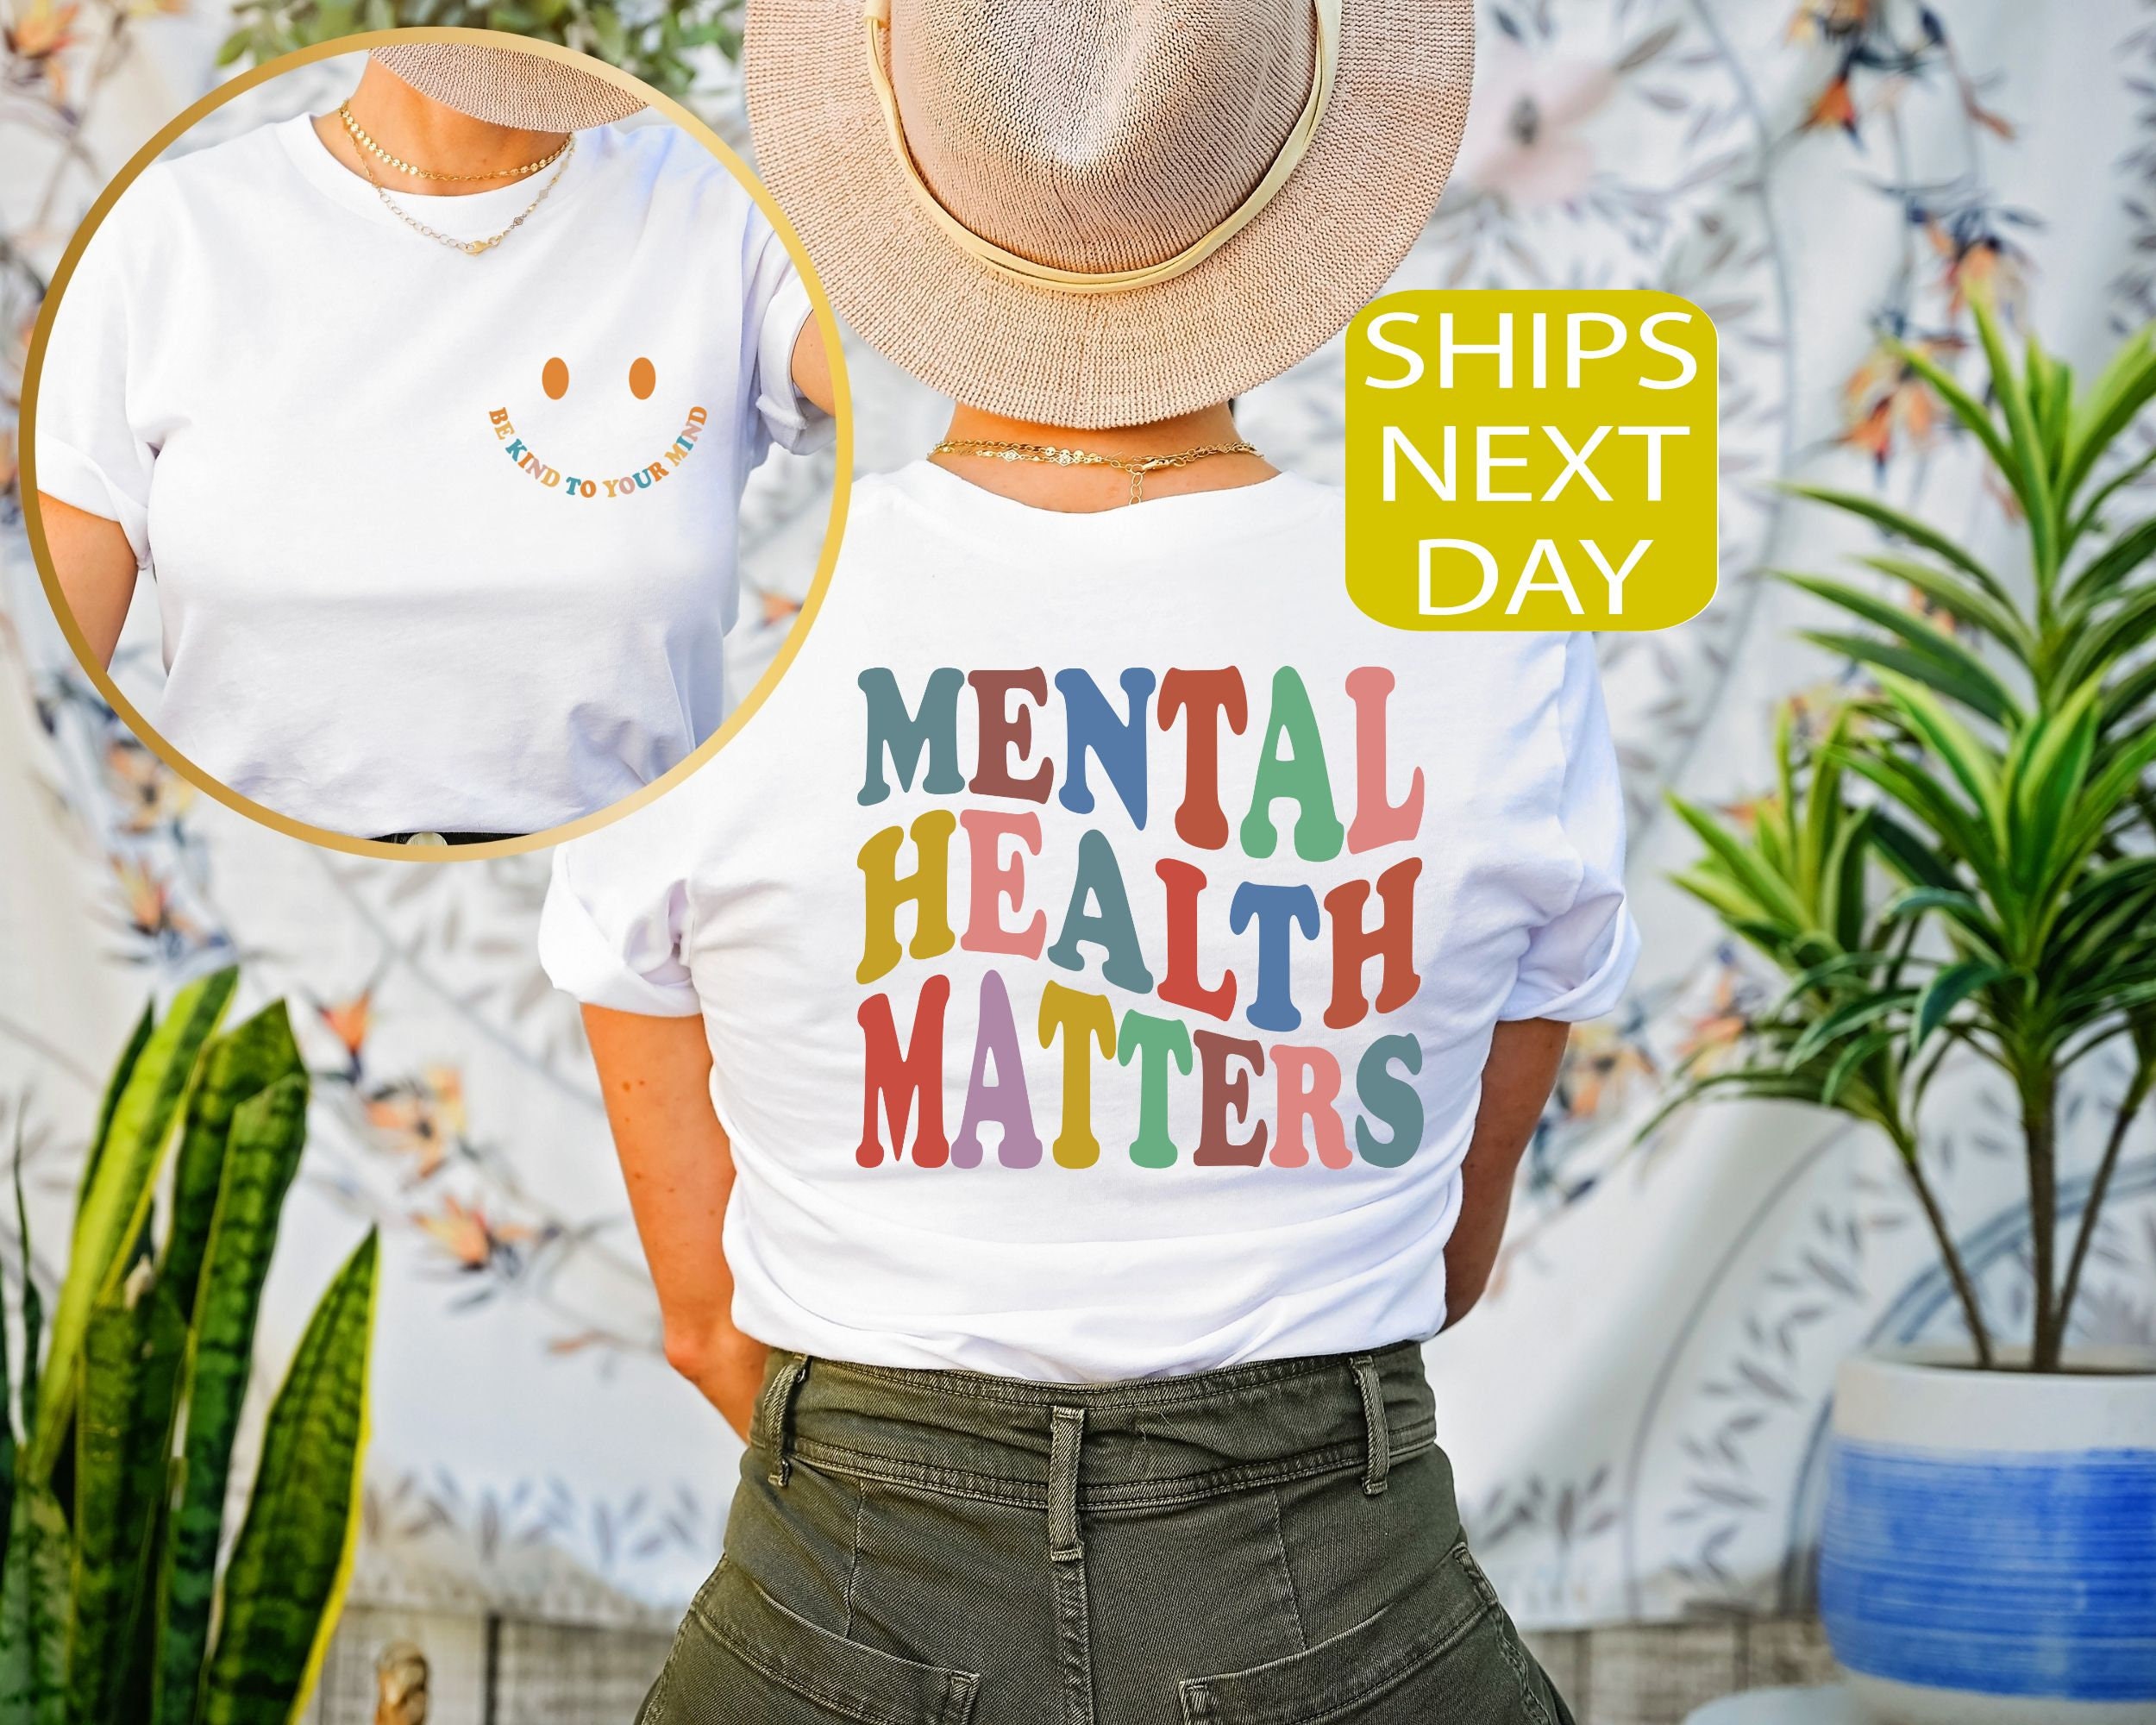 Discover Mental Health Matters Shirt, Mental Health Awareness Sweatshirt or Hoodie, Motivational Shirt, Therapist Shirt